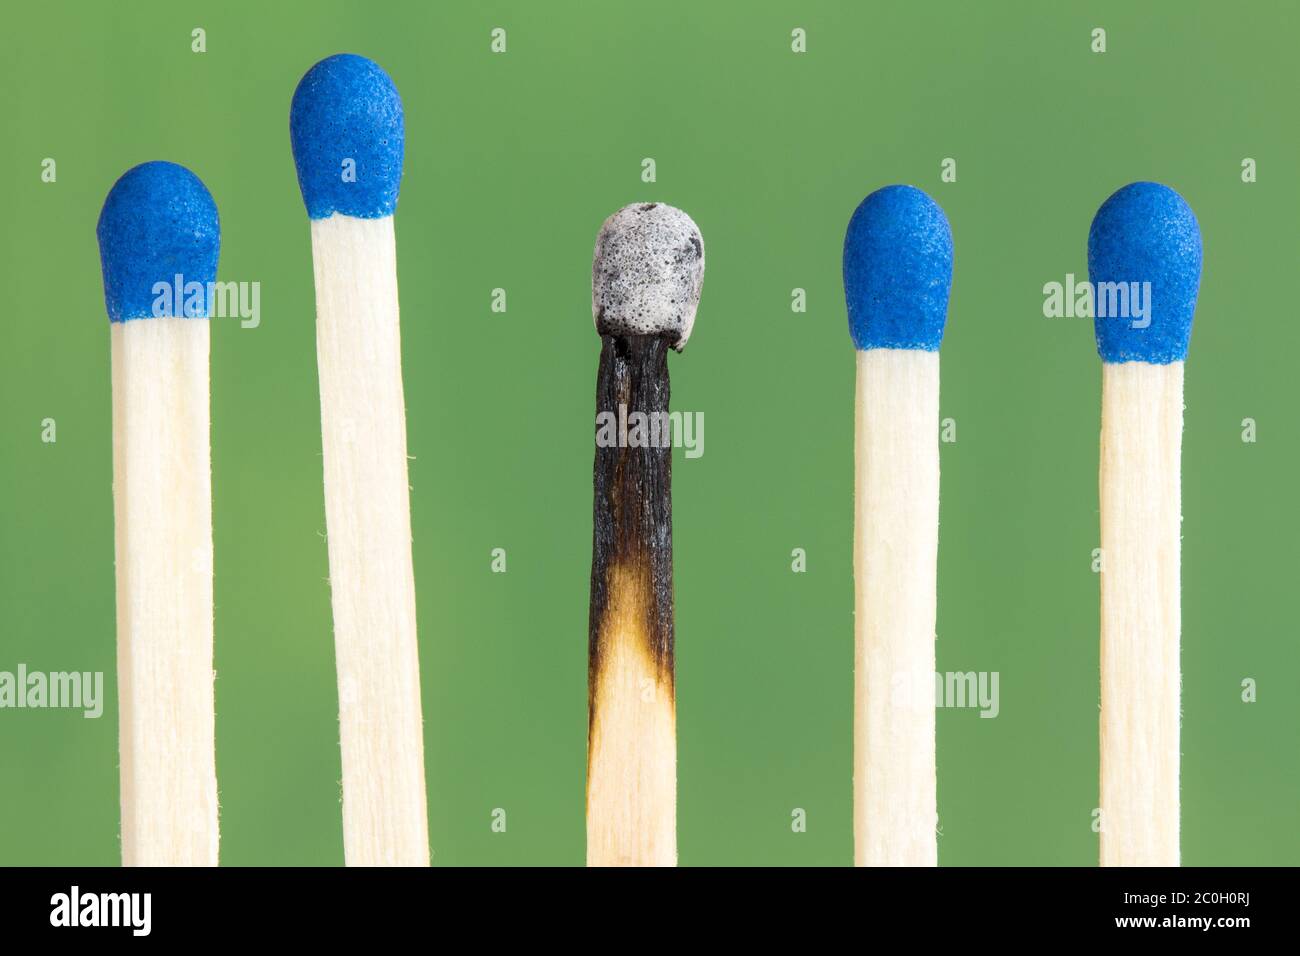 Row of match sticks on  green background Stock Photo